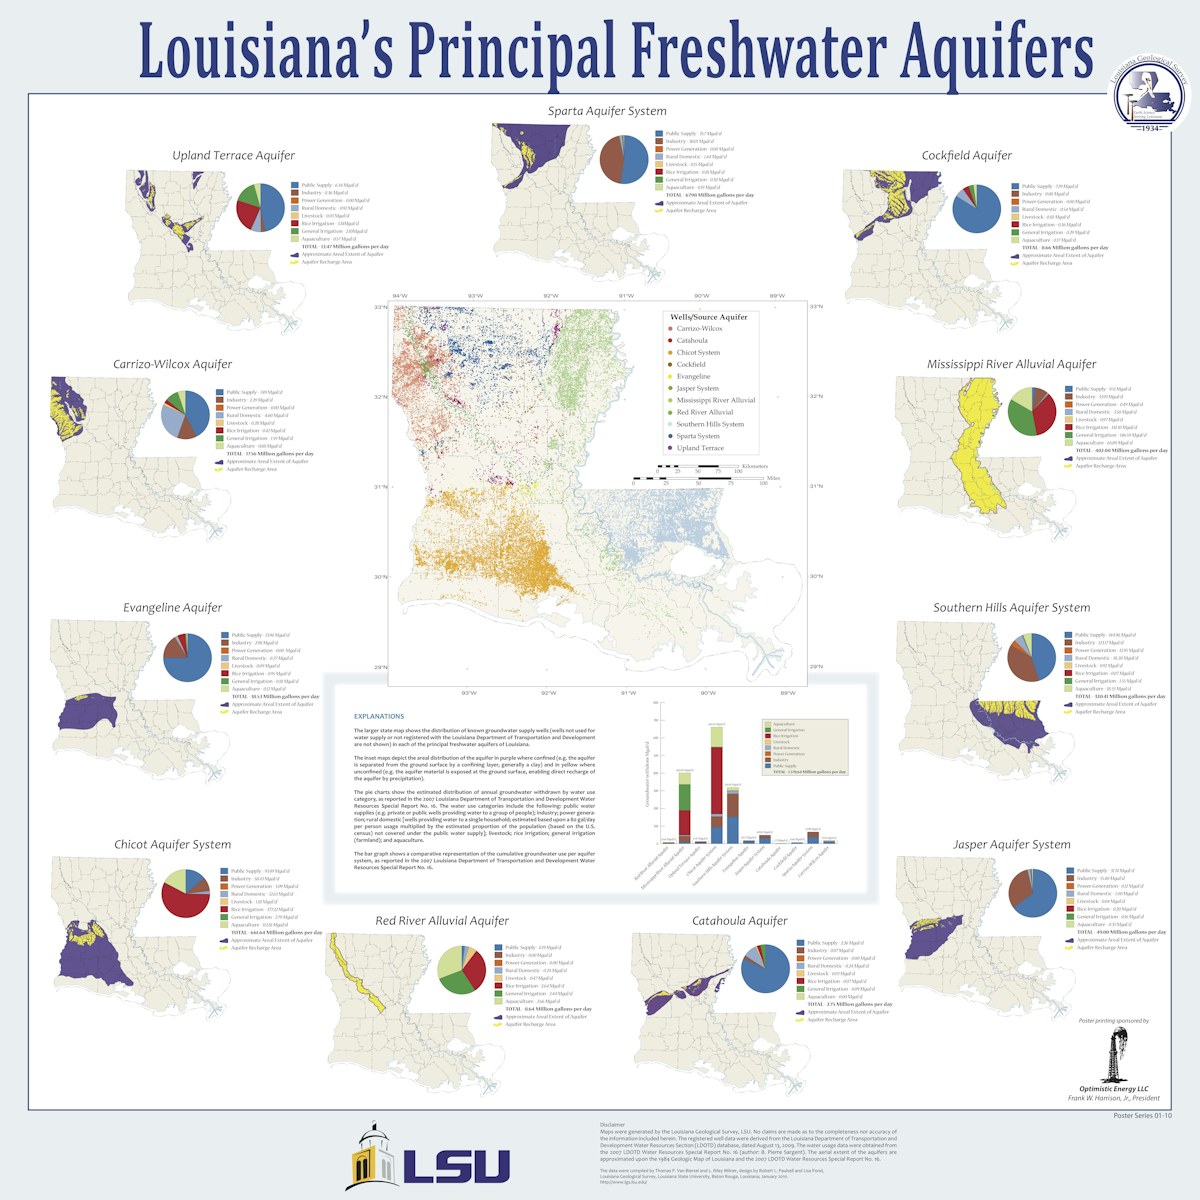 Louisiana's Principal Freshwater Aquifers